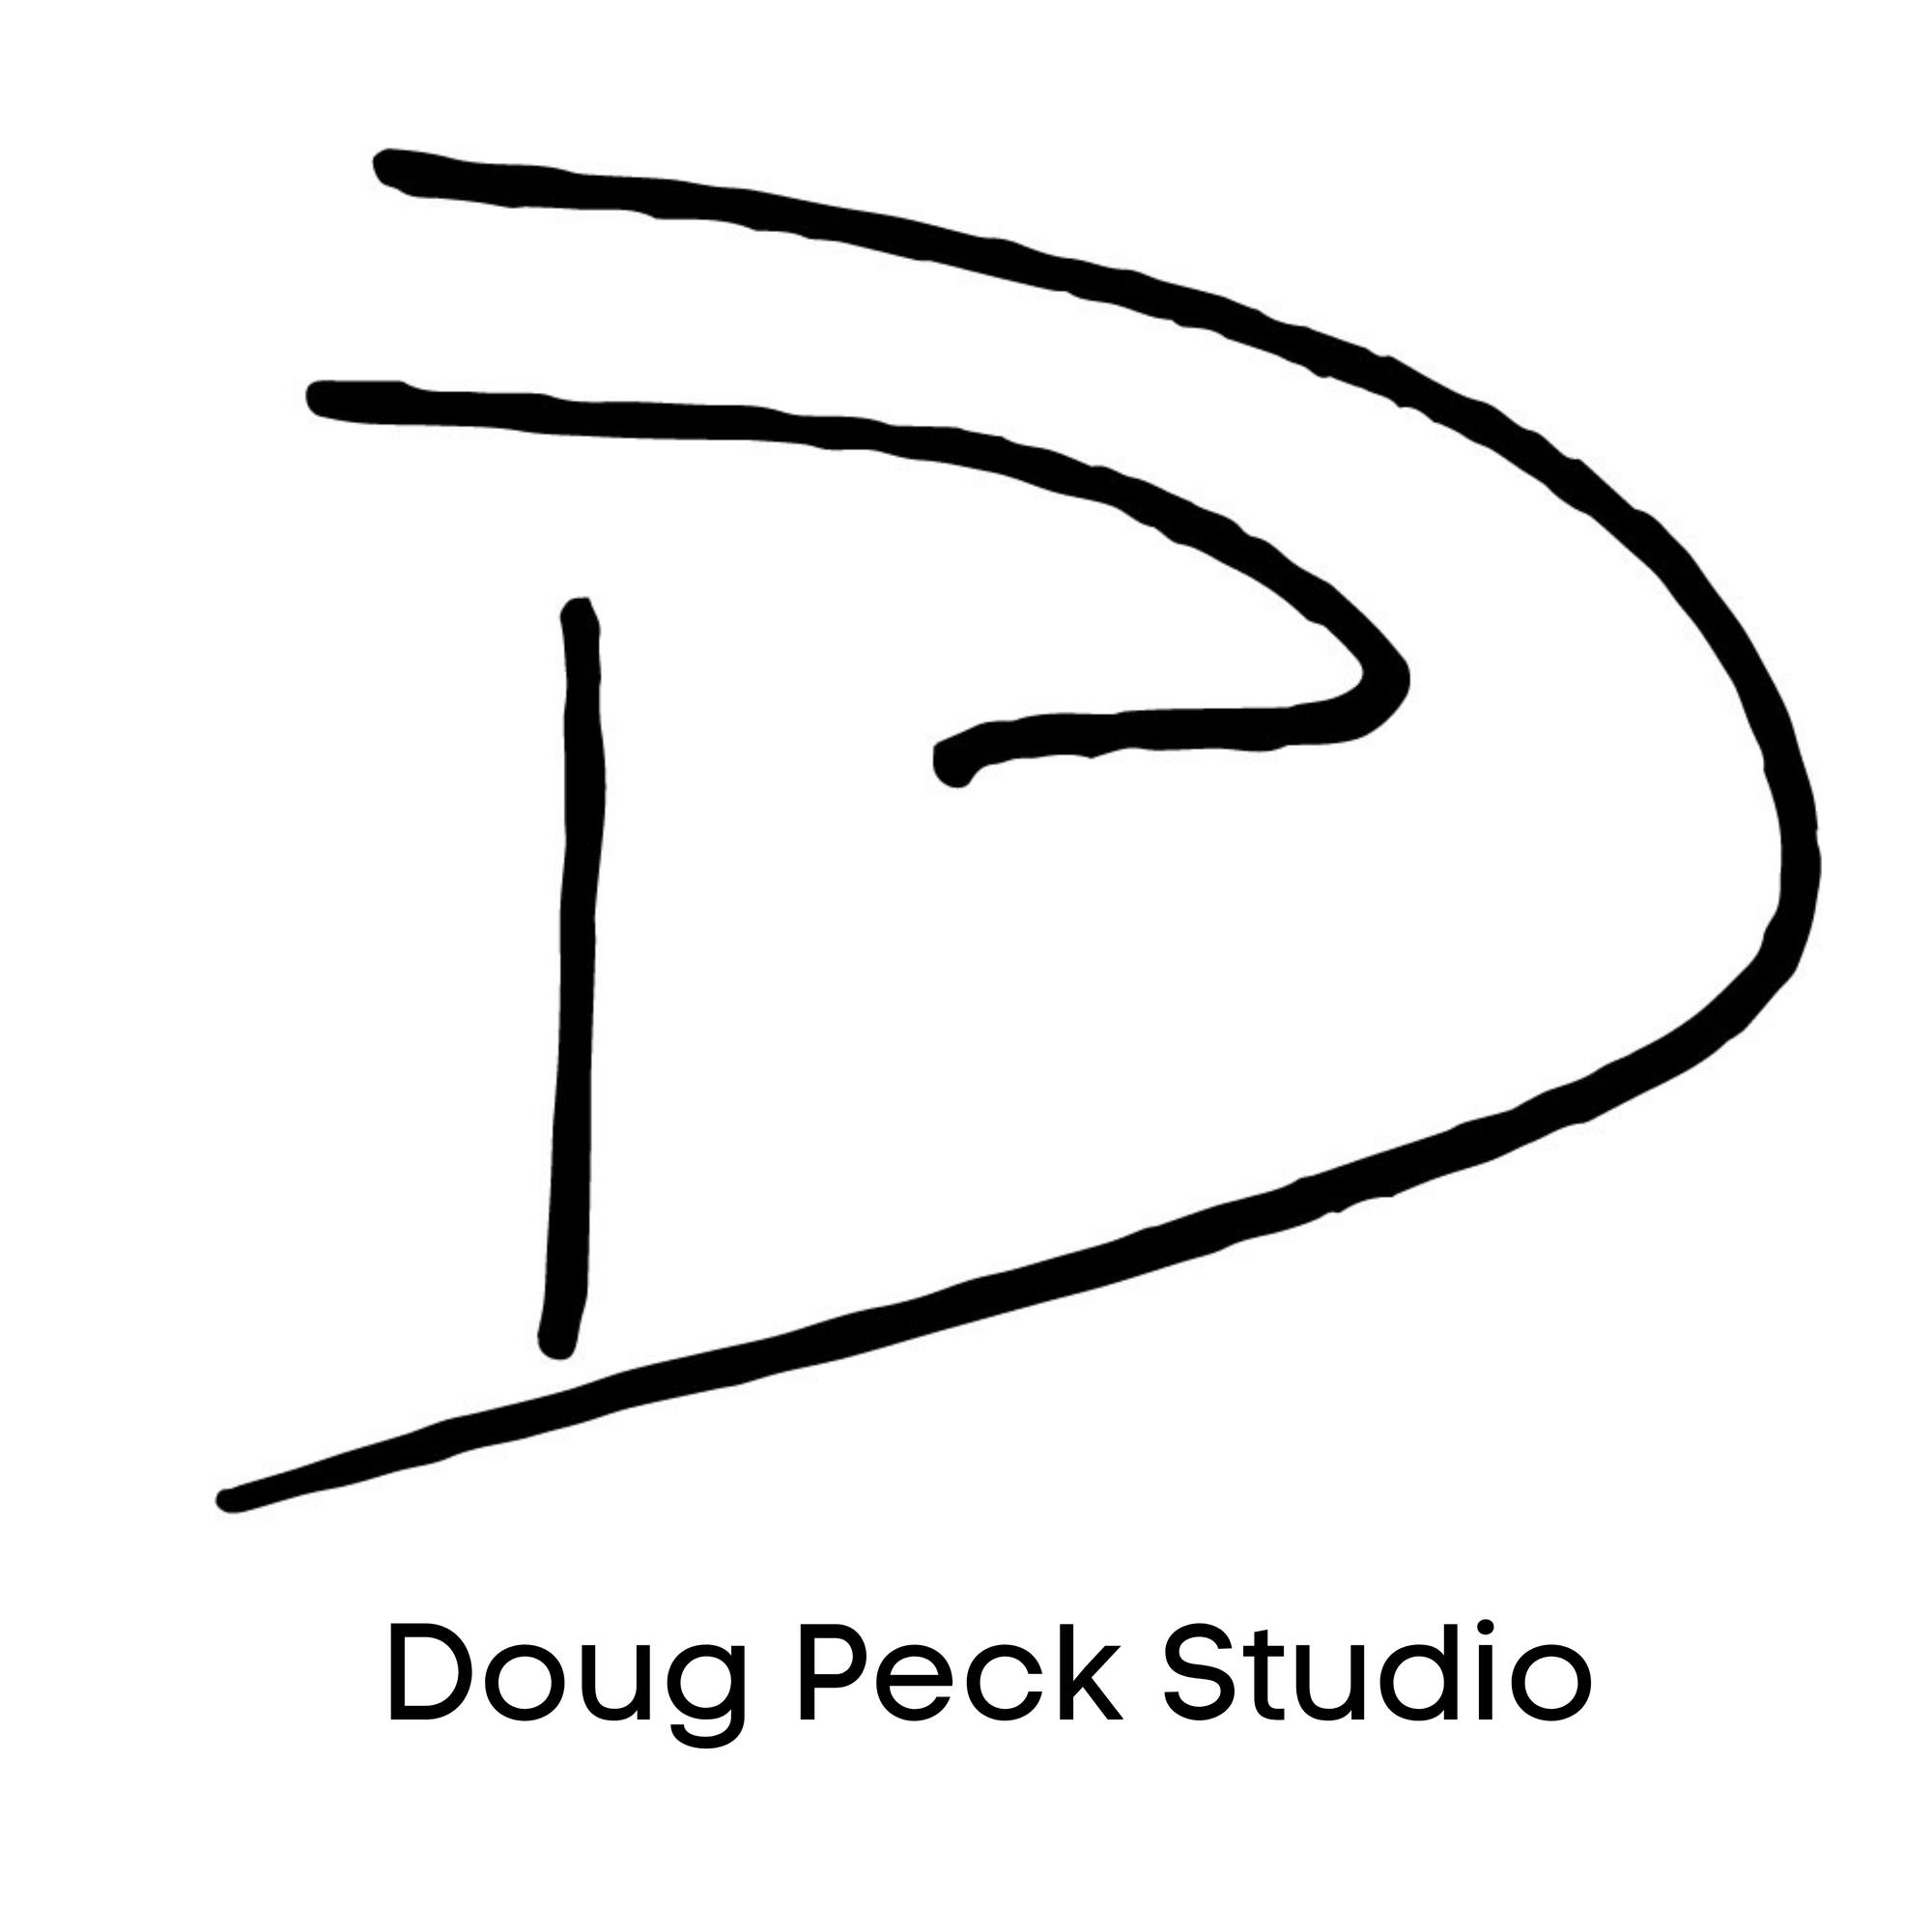 Doug Peck Studio